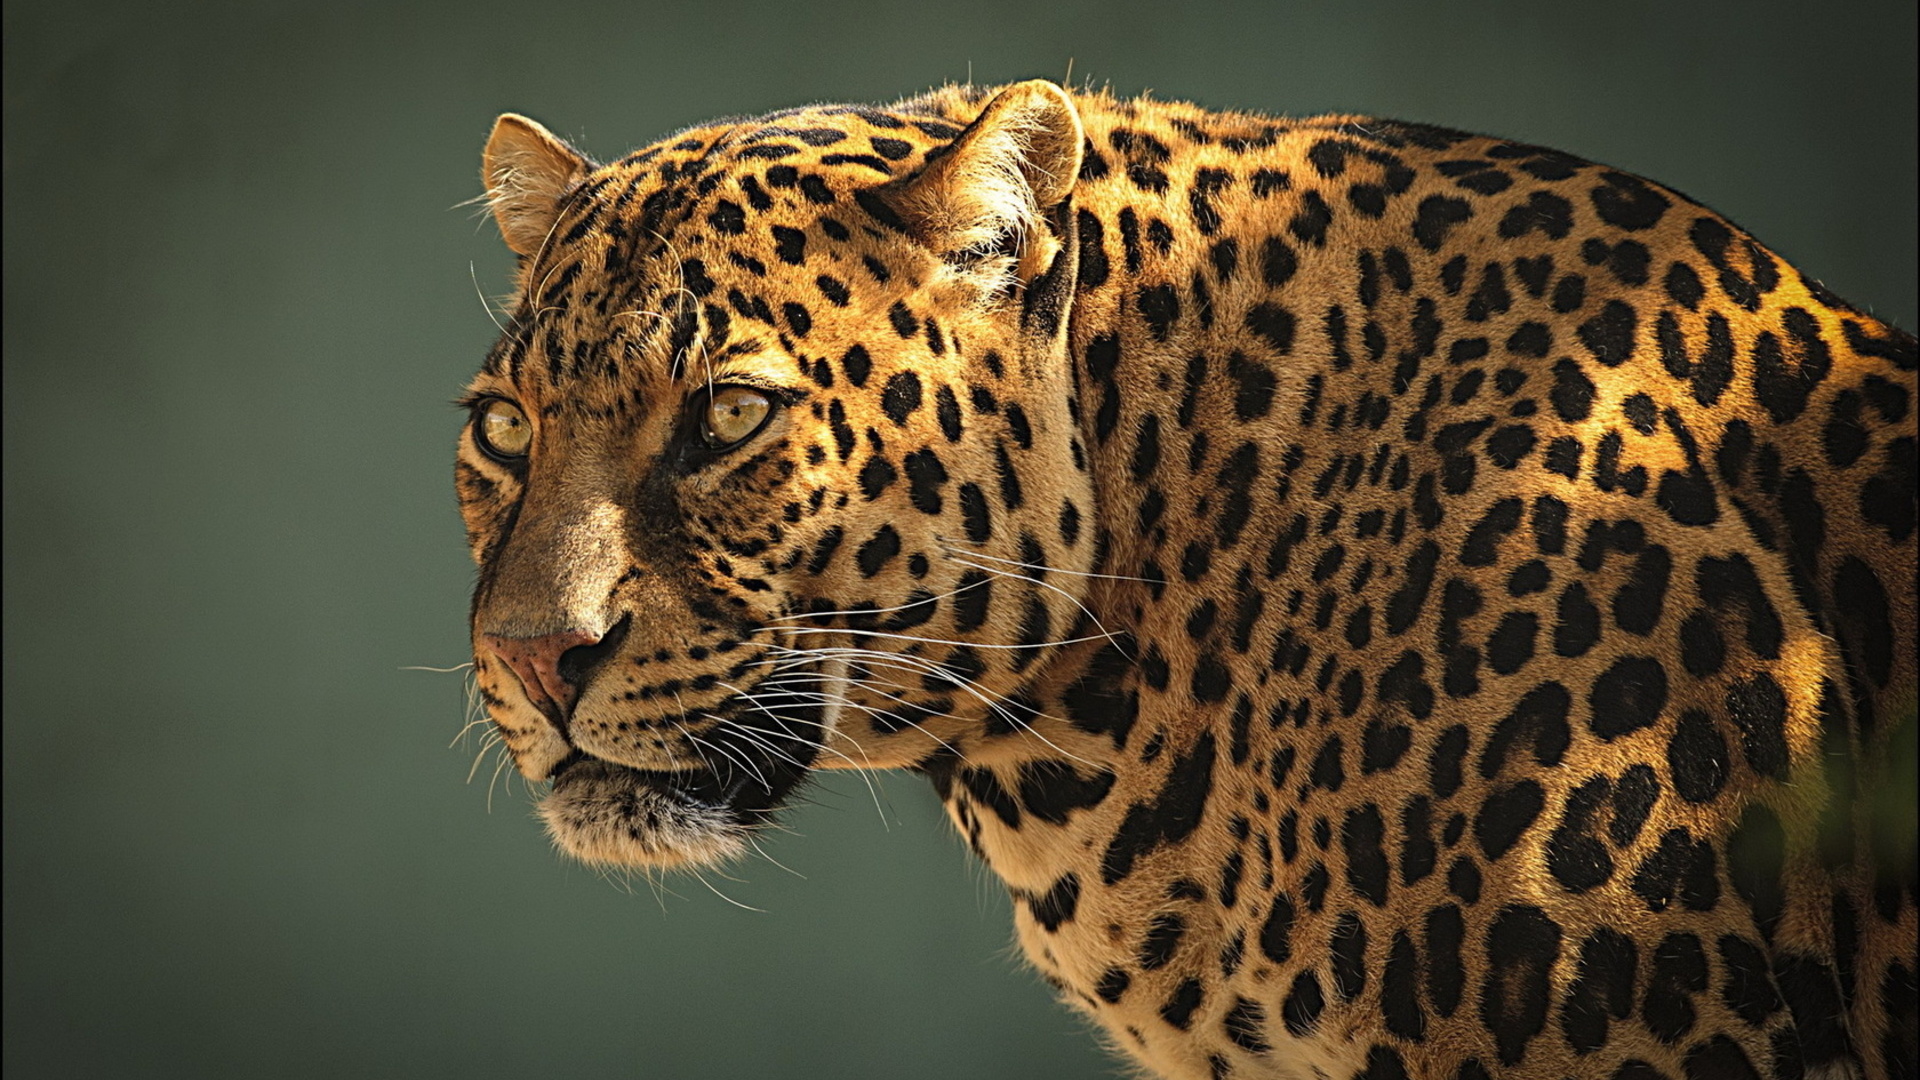 Leopard photos